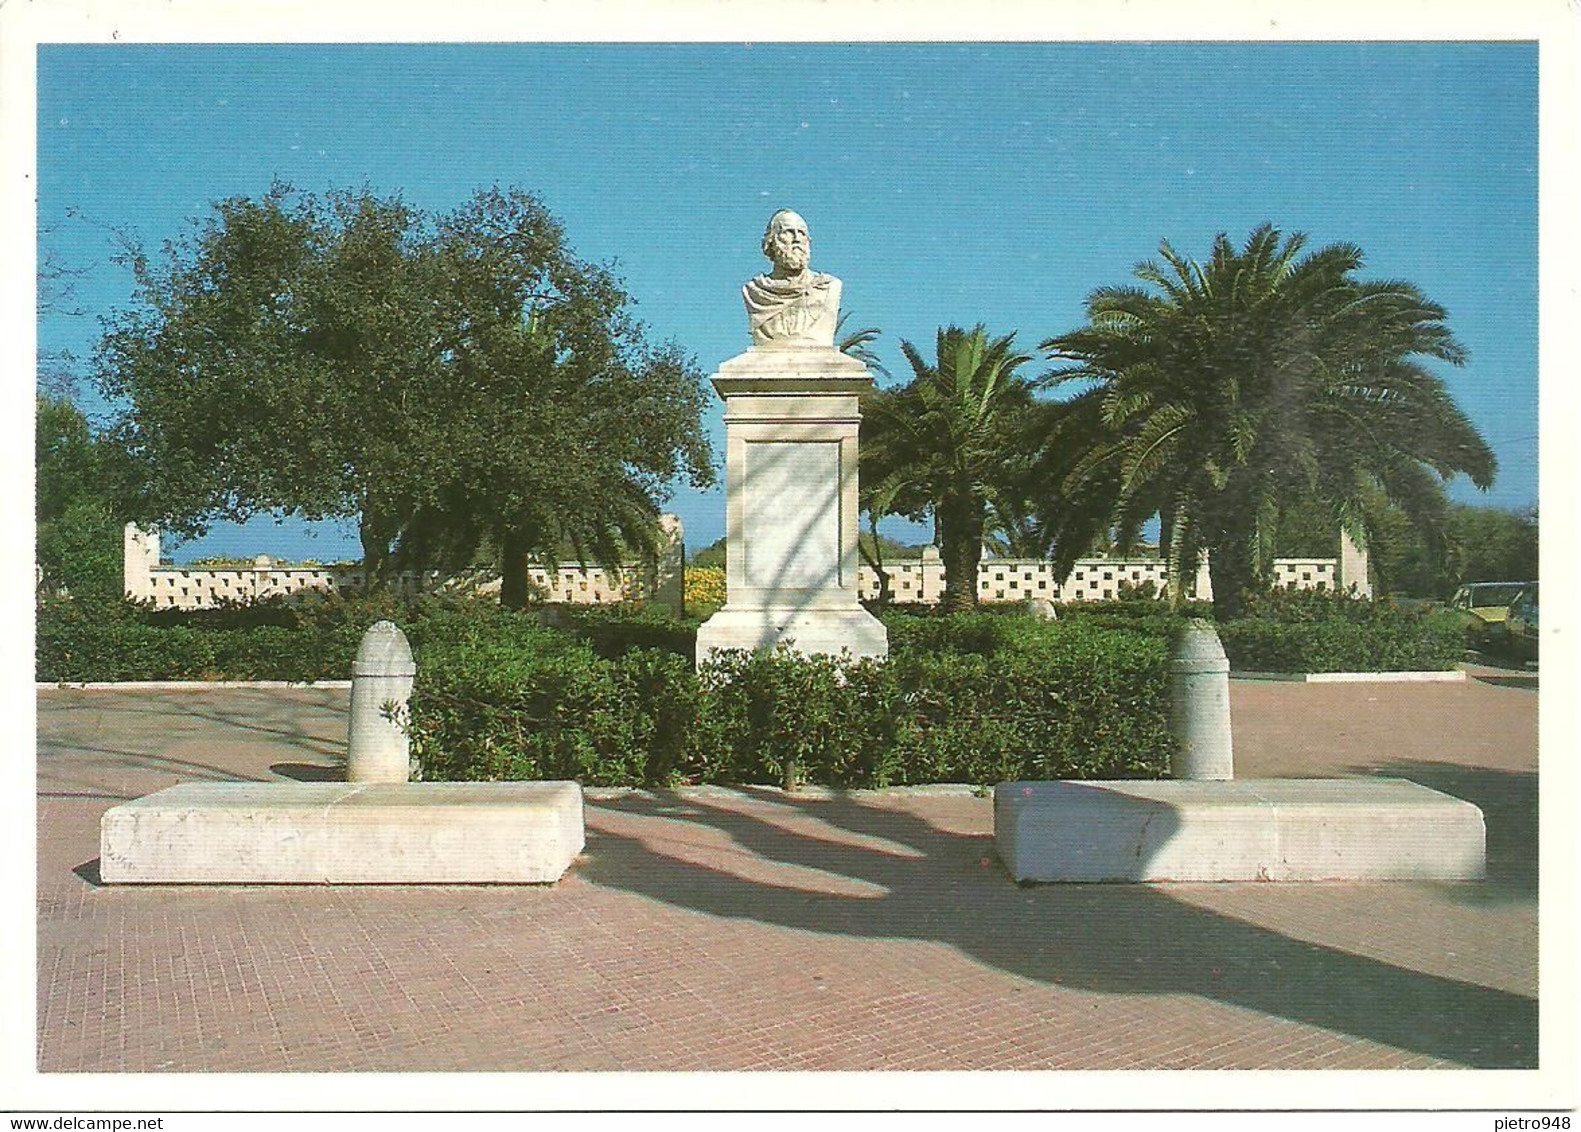 Marsala (Trapani) Monumento A G. Garibaldi, G. Garibaldi Monument, G. Garibaldi Denkmal - Marsala